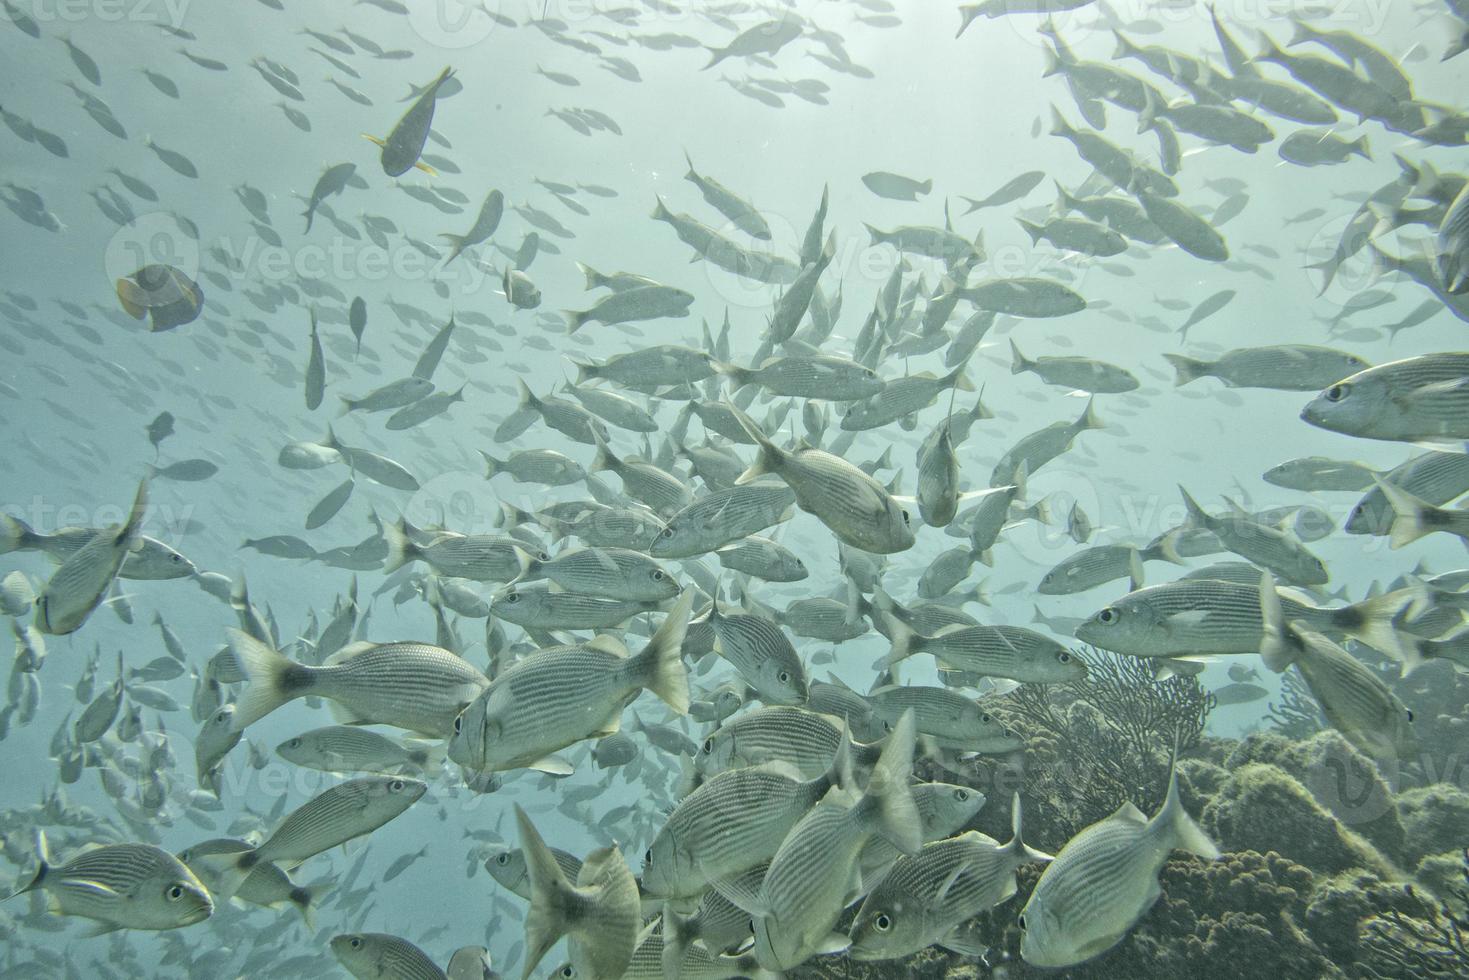 A school of fish underwater photo